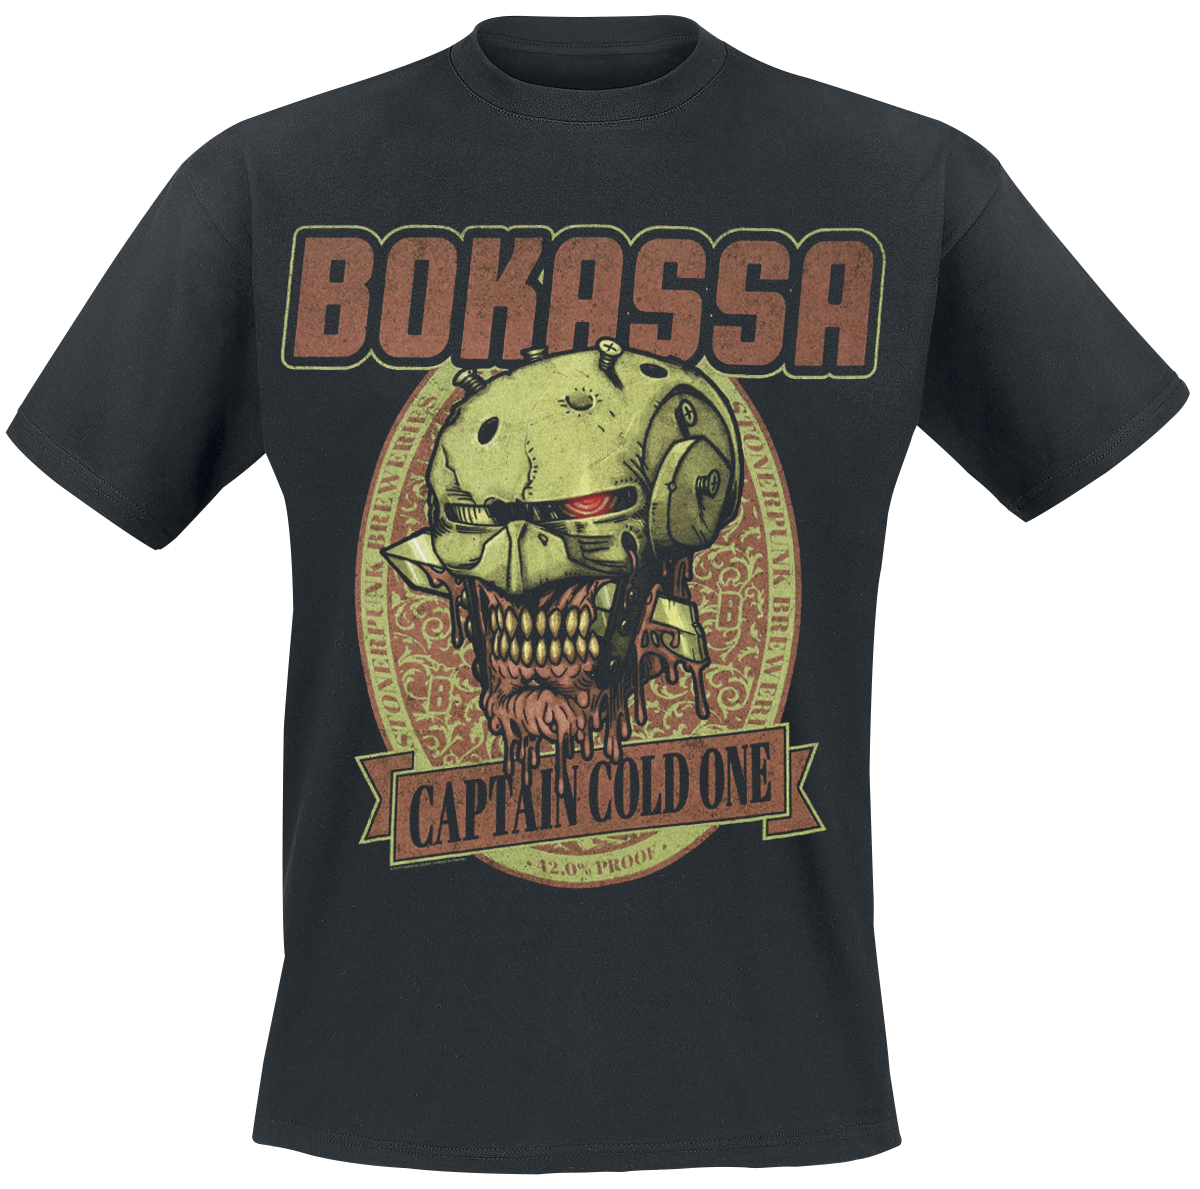 Bokassa - Captain Cold One - T-Shirt - black image